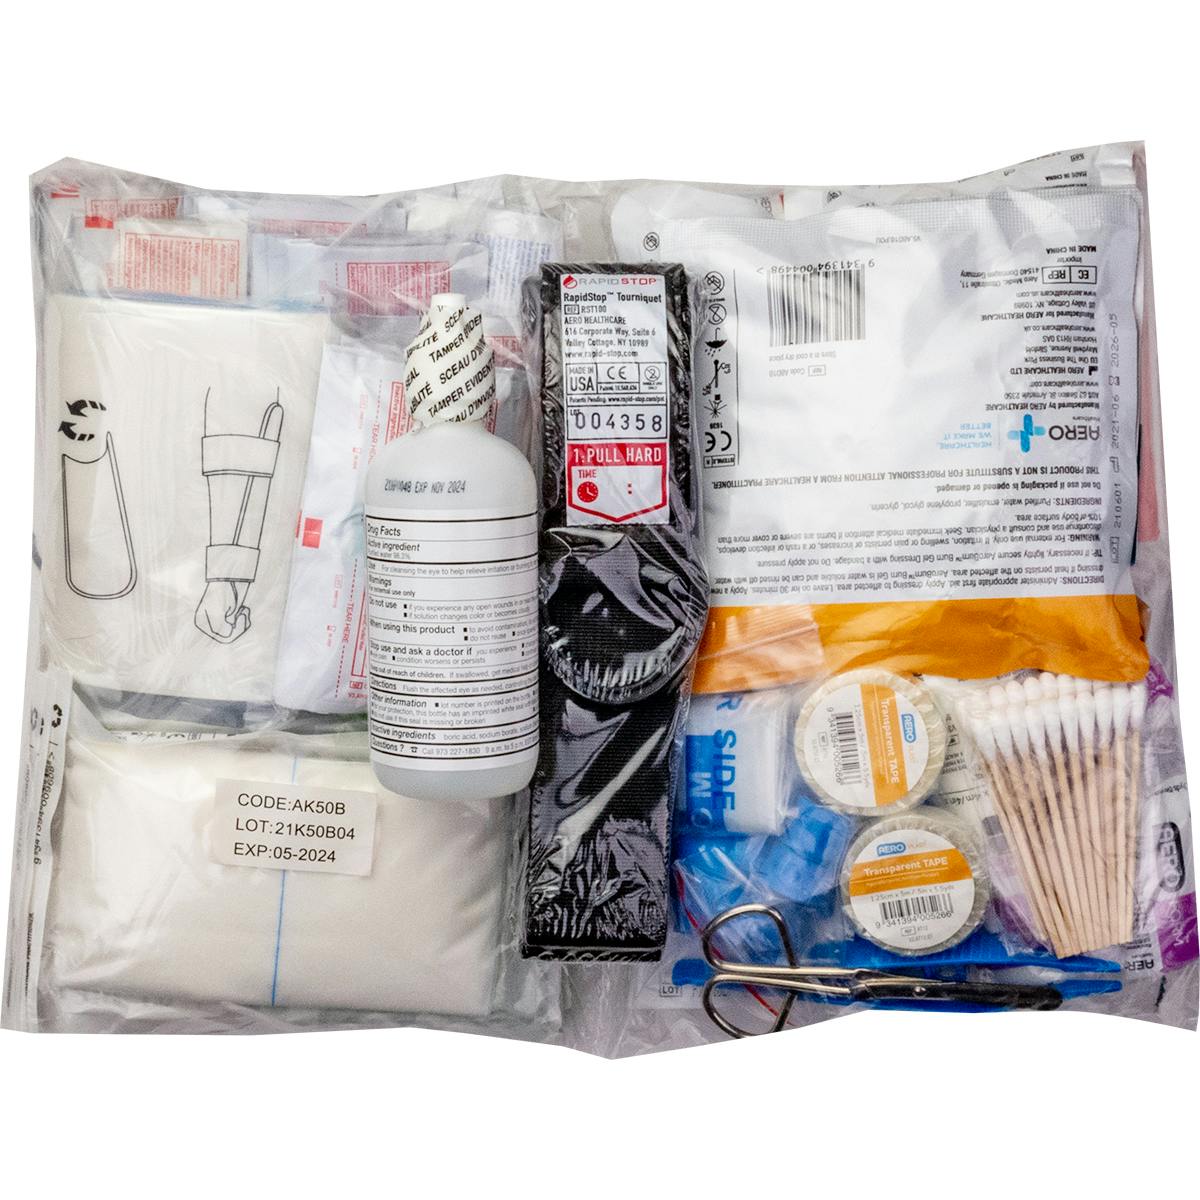 ANSI Class B First Aid Refill Pouches - 50 Person, Clear (299-21050B-RP) - KIT